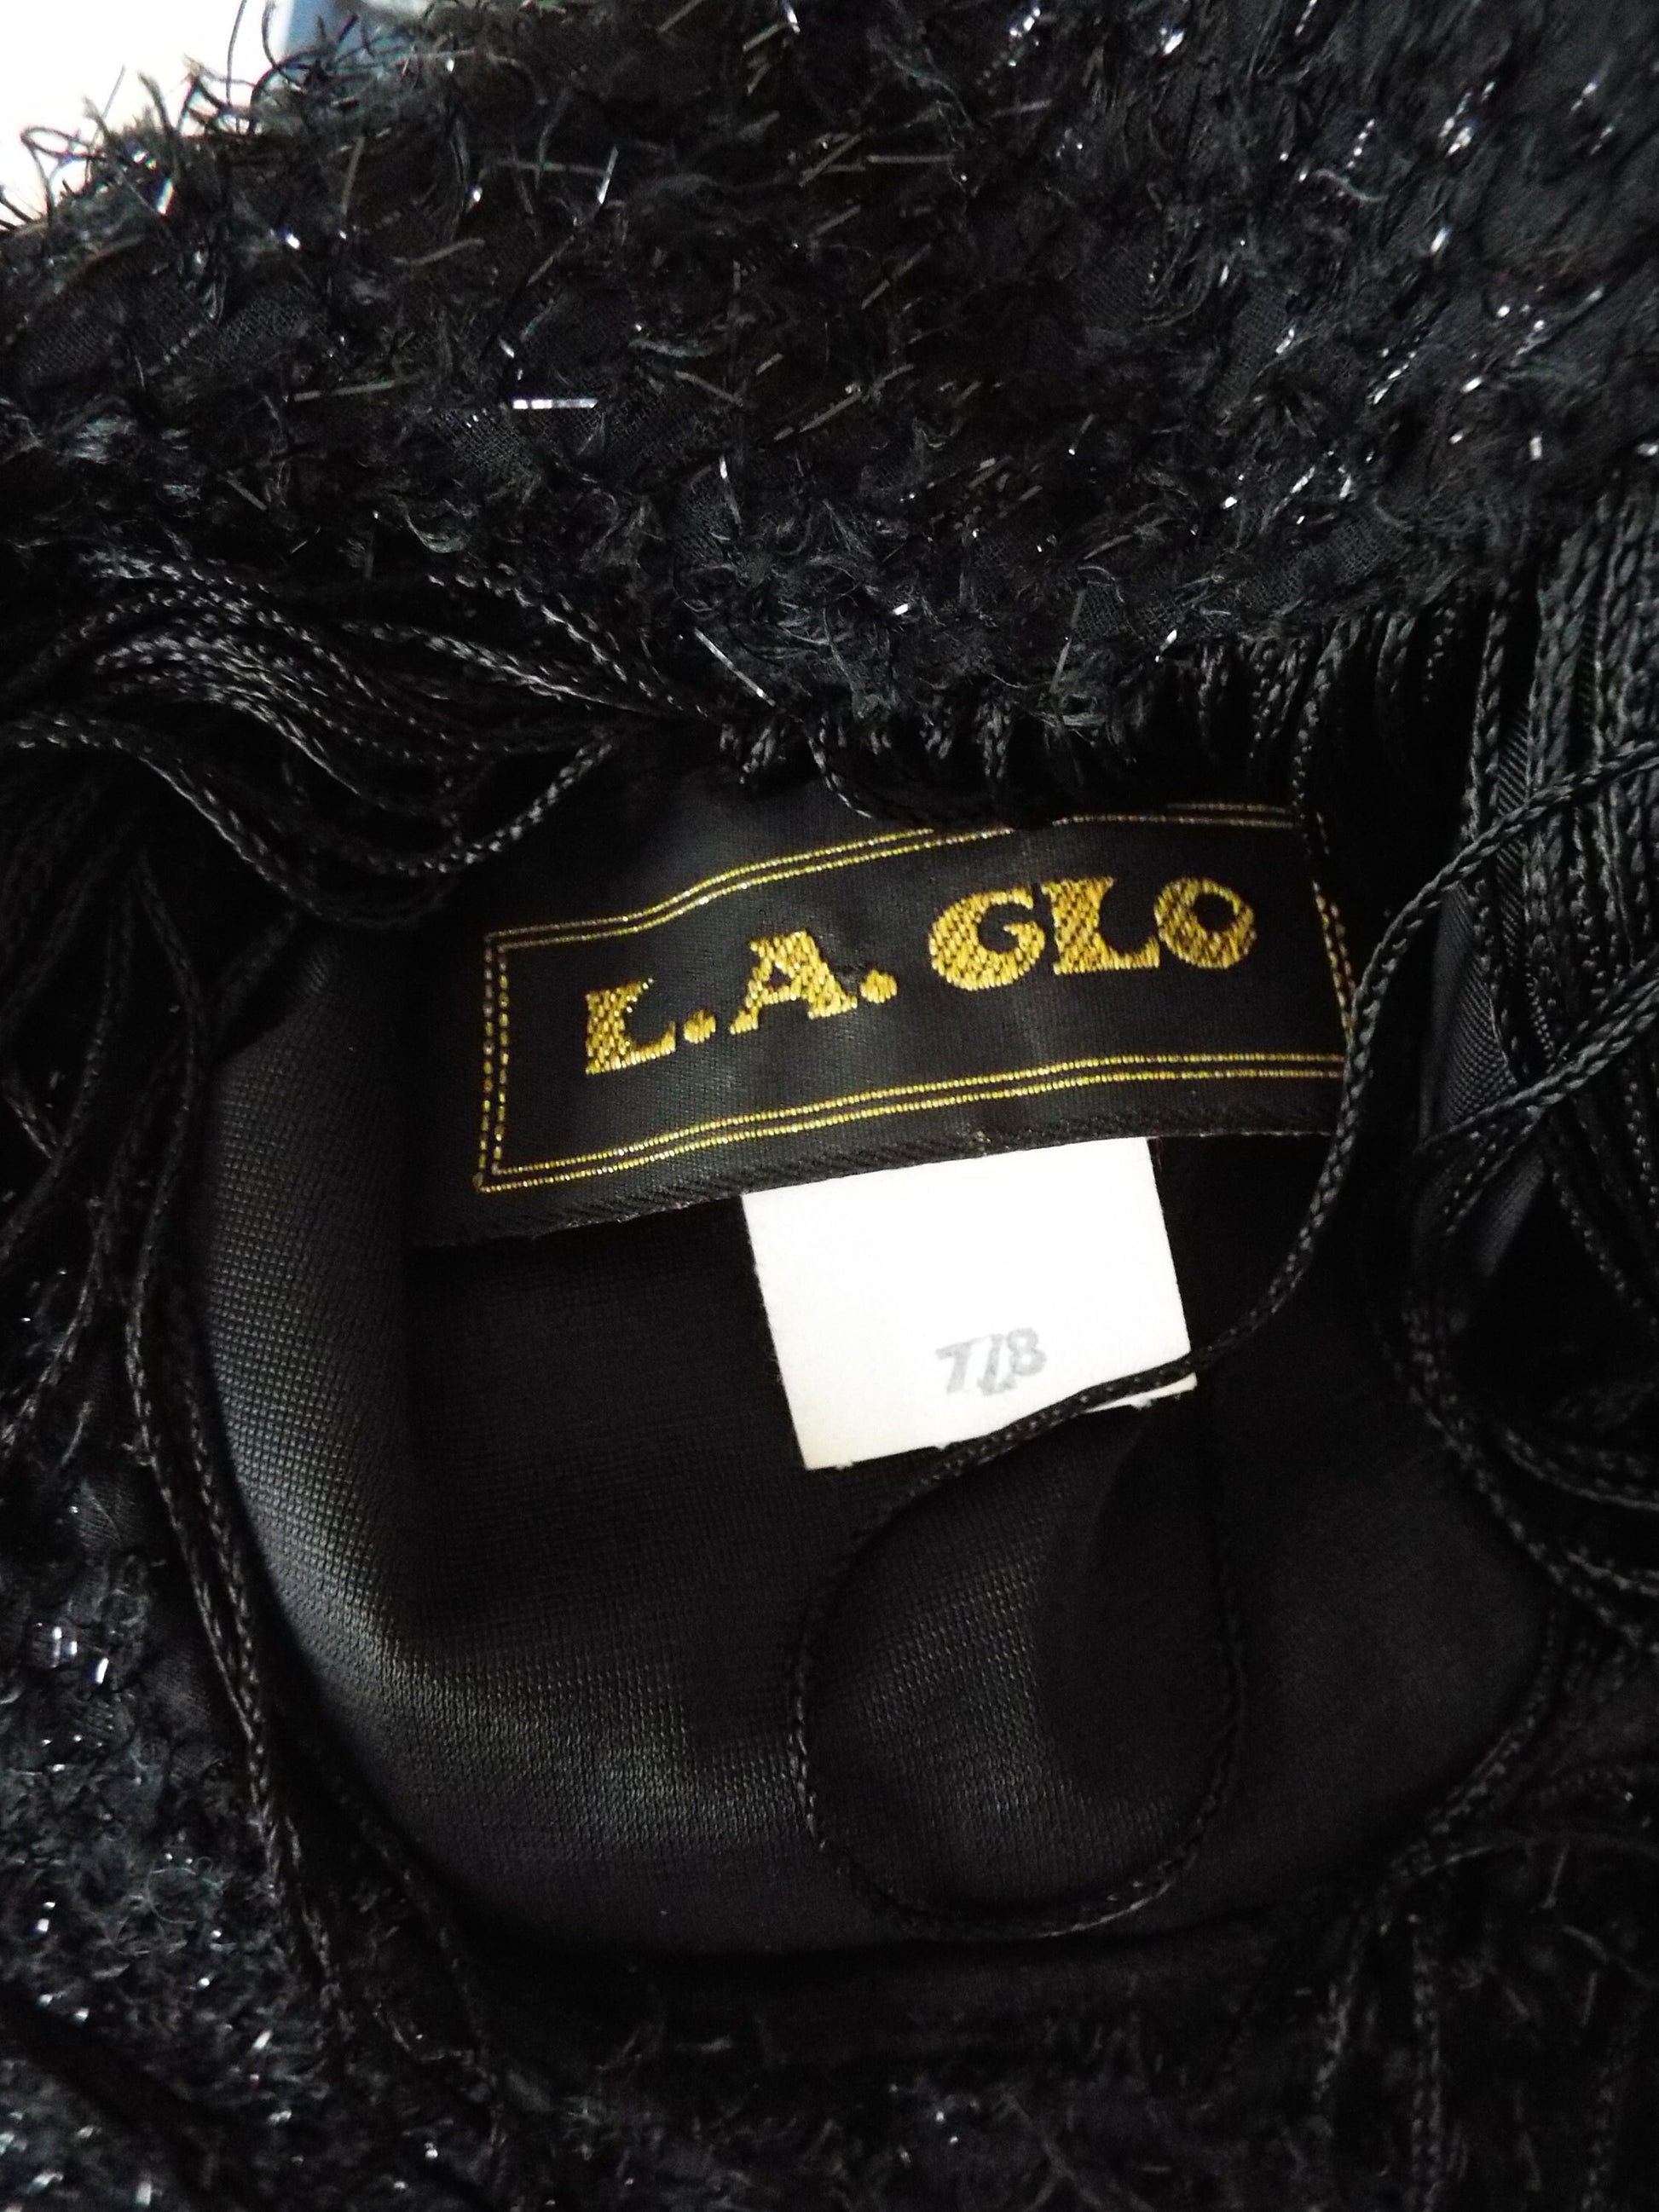 Vintage Sleeveless Black Dress by L.A Glo – RetroGetgo